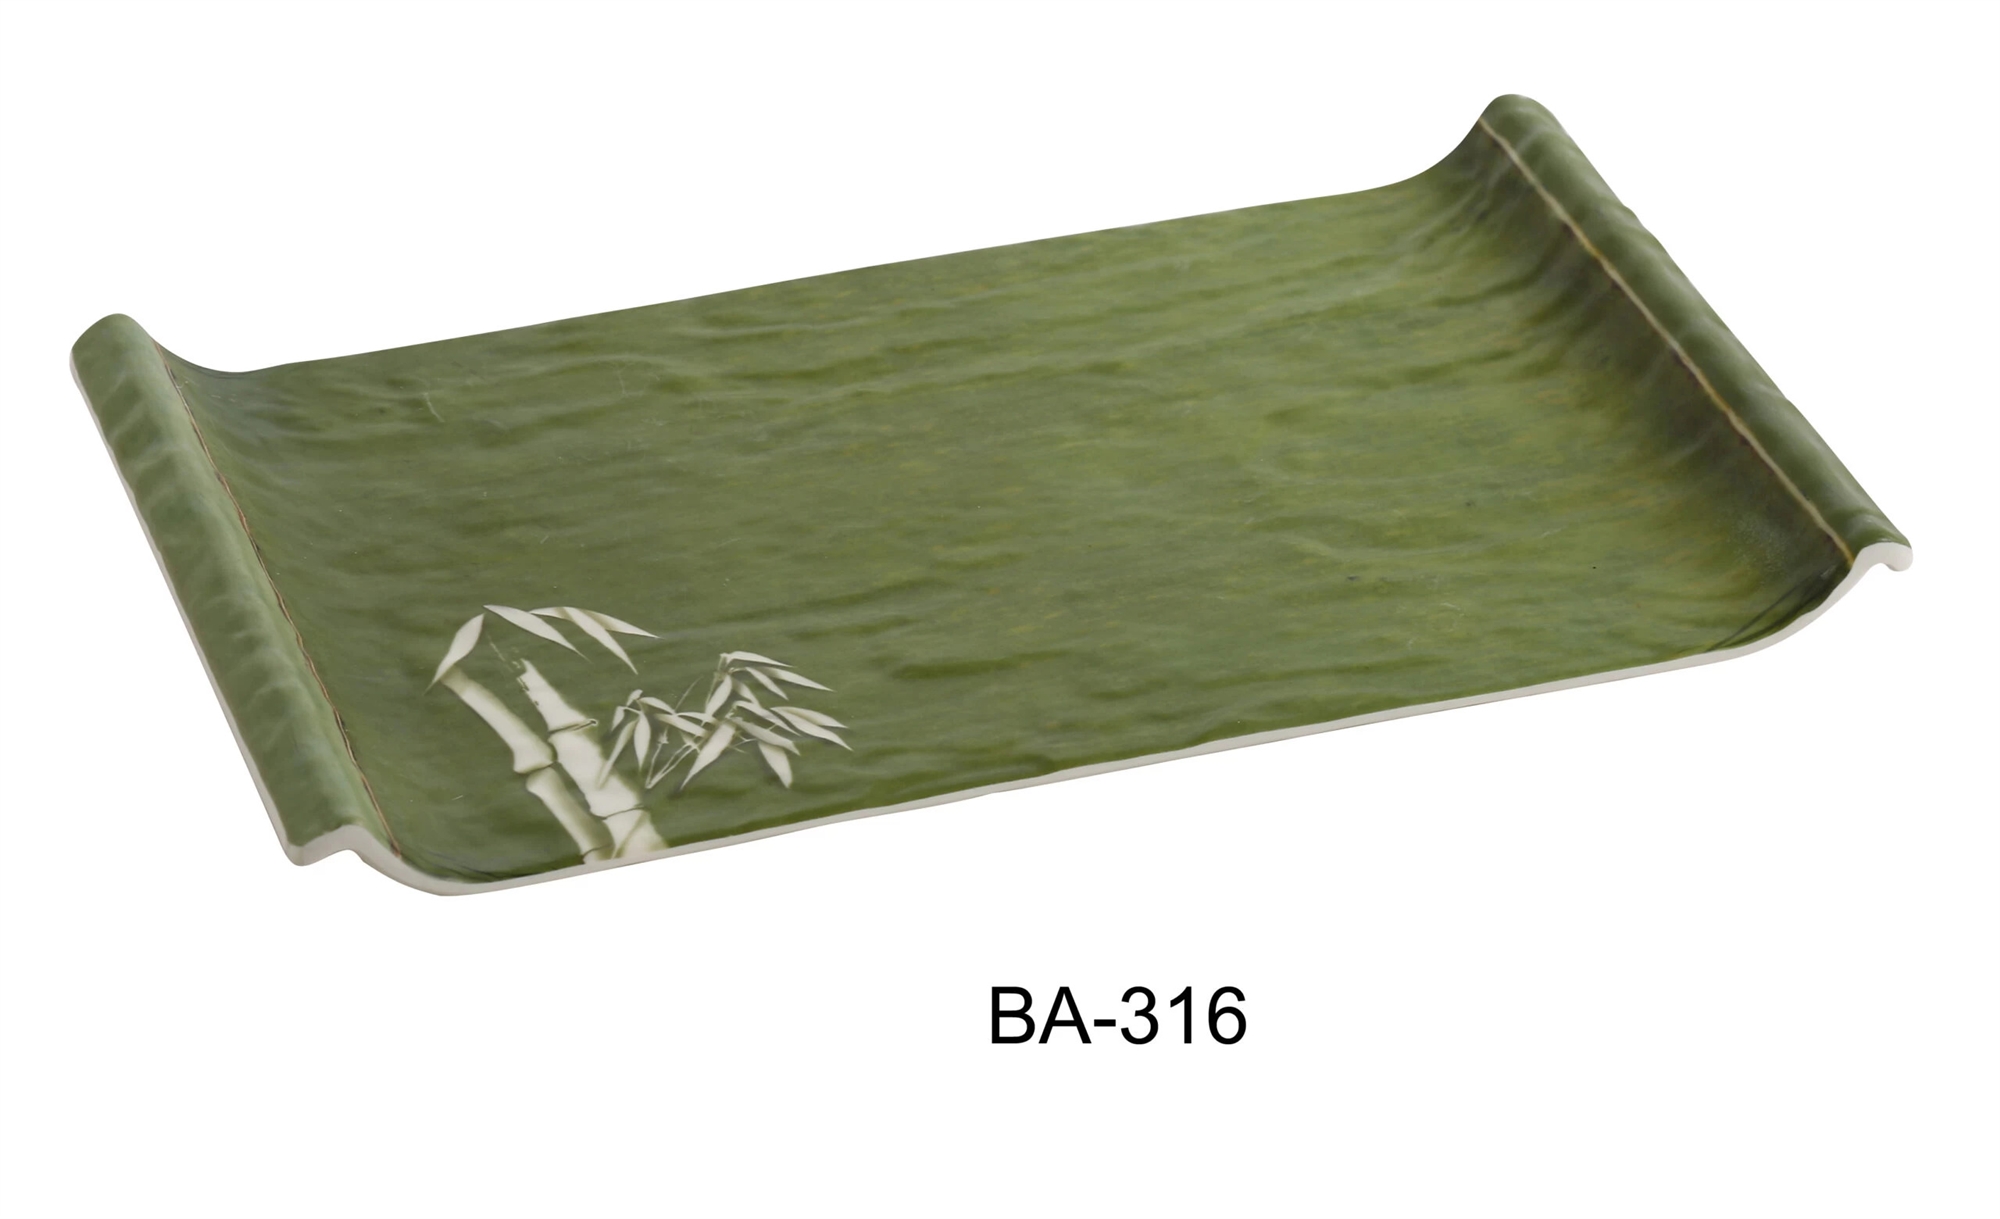 Yanco BA-316 Bamboo Style 16â€³ X 9â€³ Display Plate